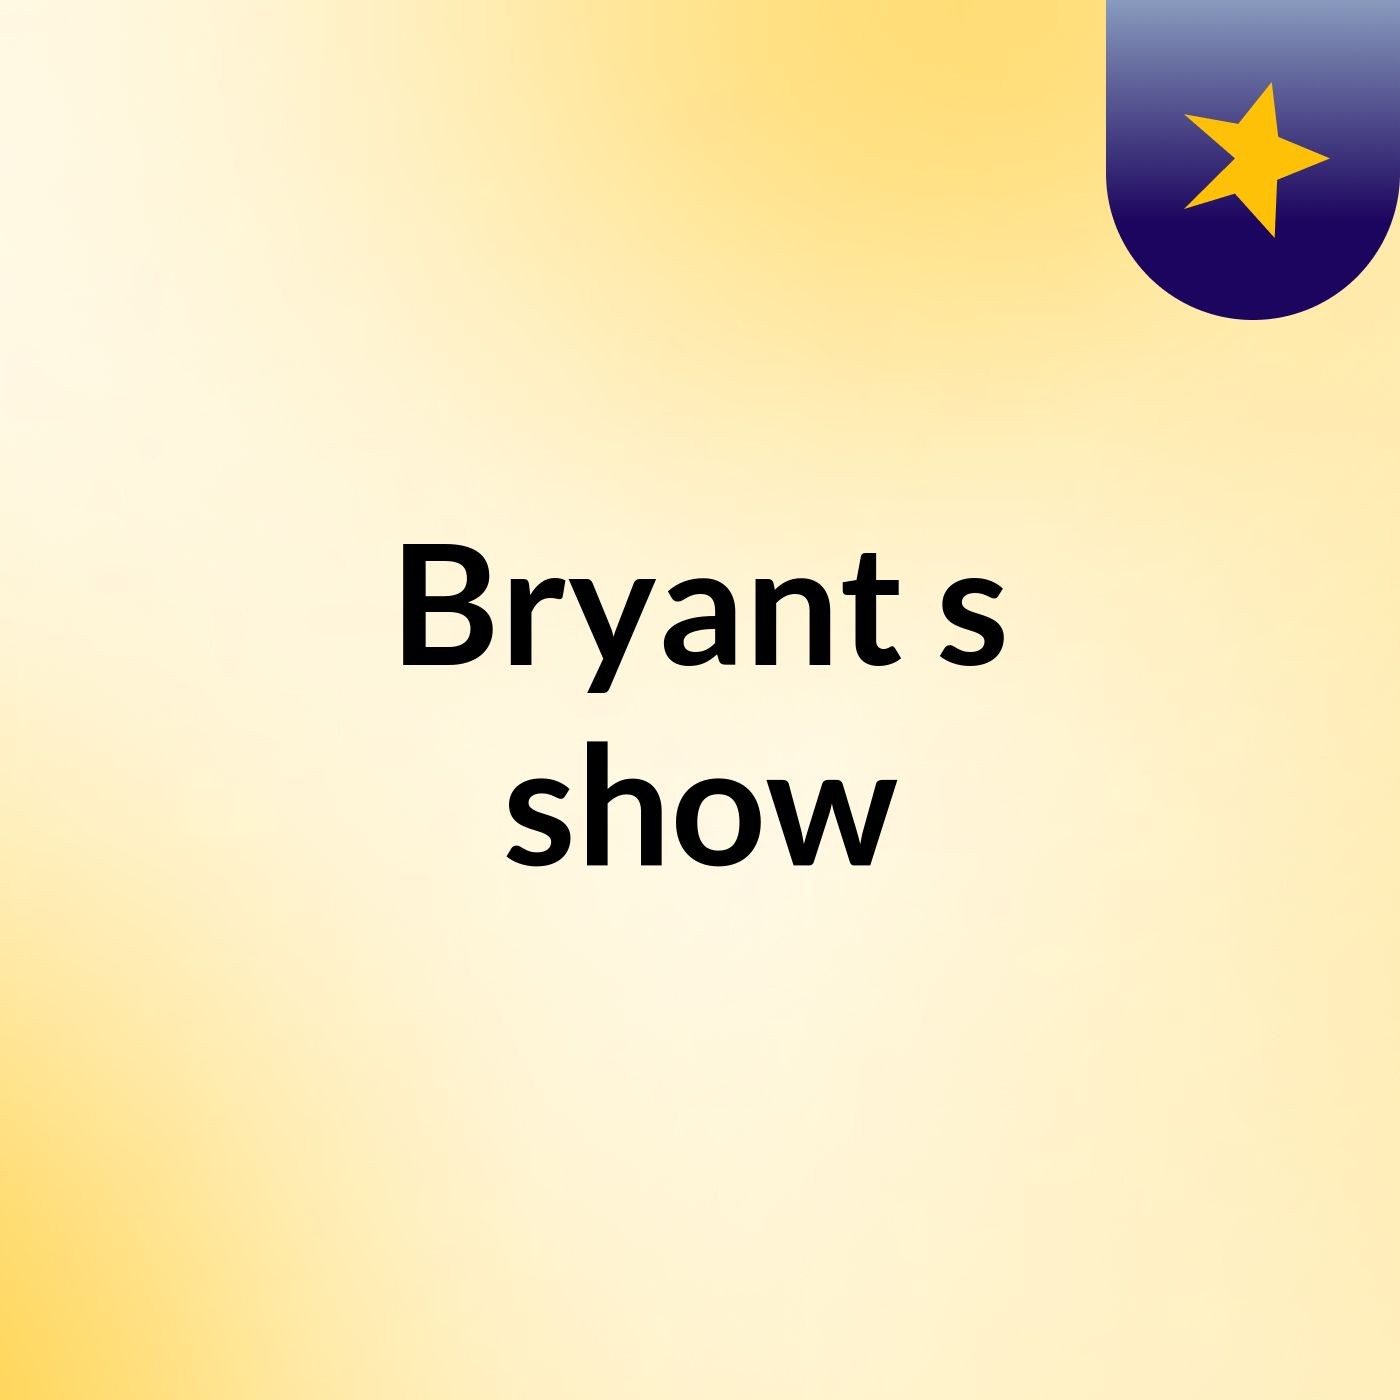 Bryant's show